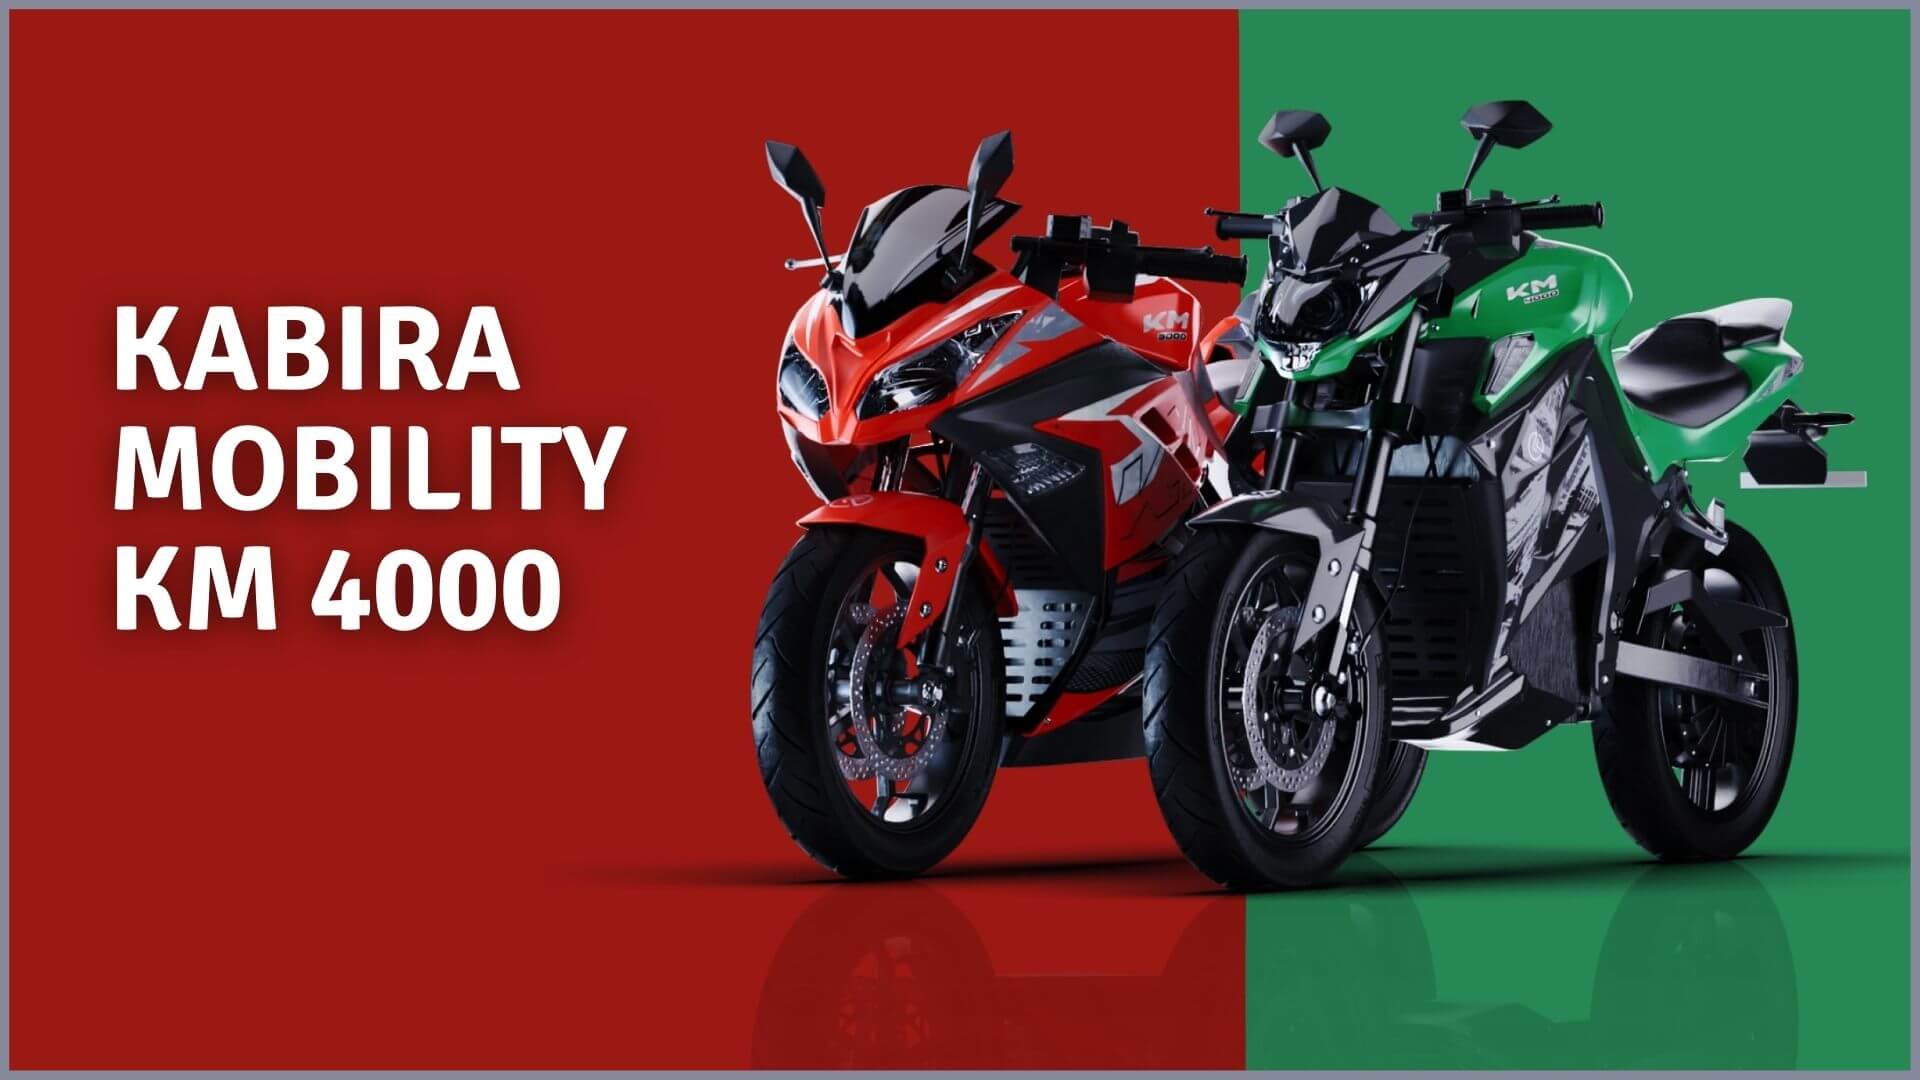 https://e-vehicleinfo.com/kabira-mobility-km-4000-price-range-and-top-speed/